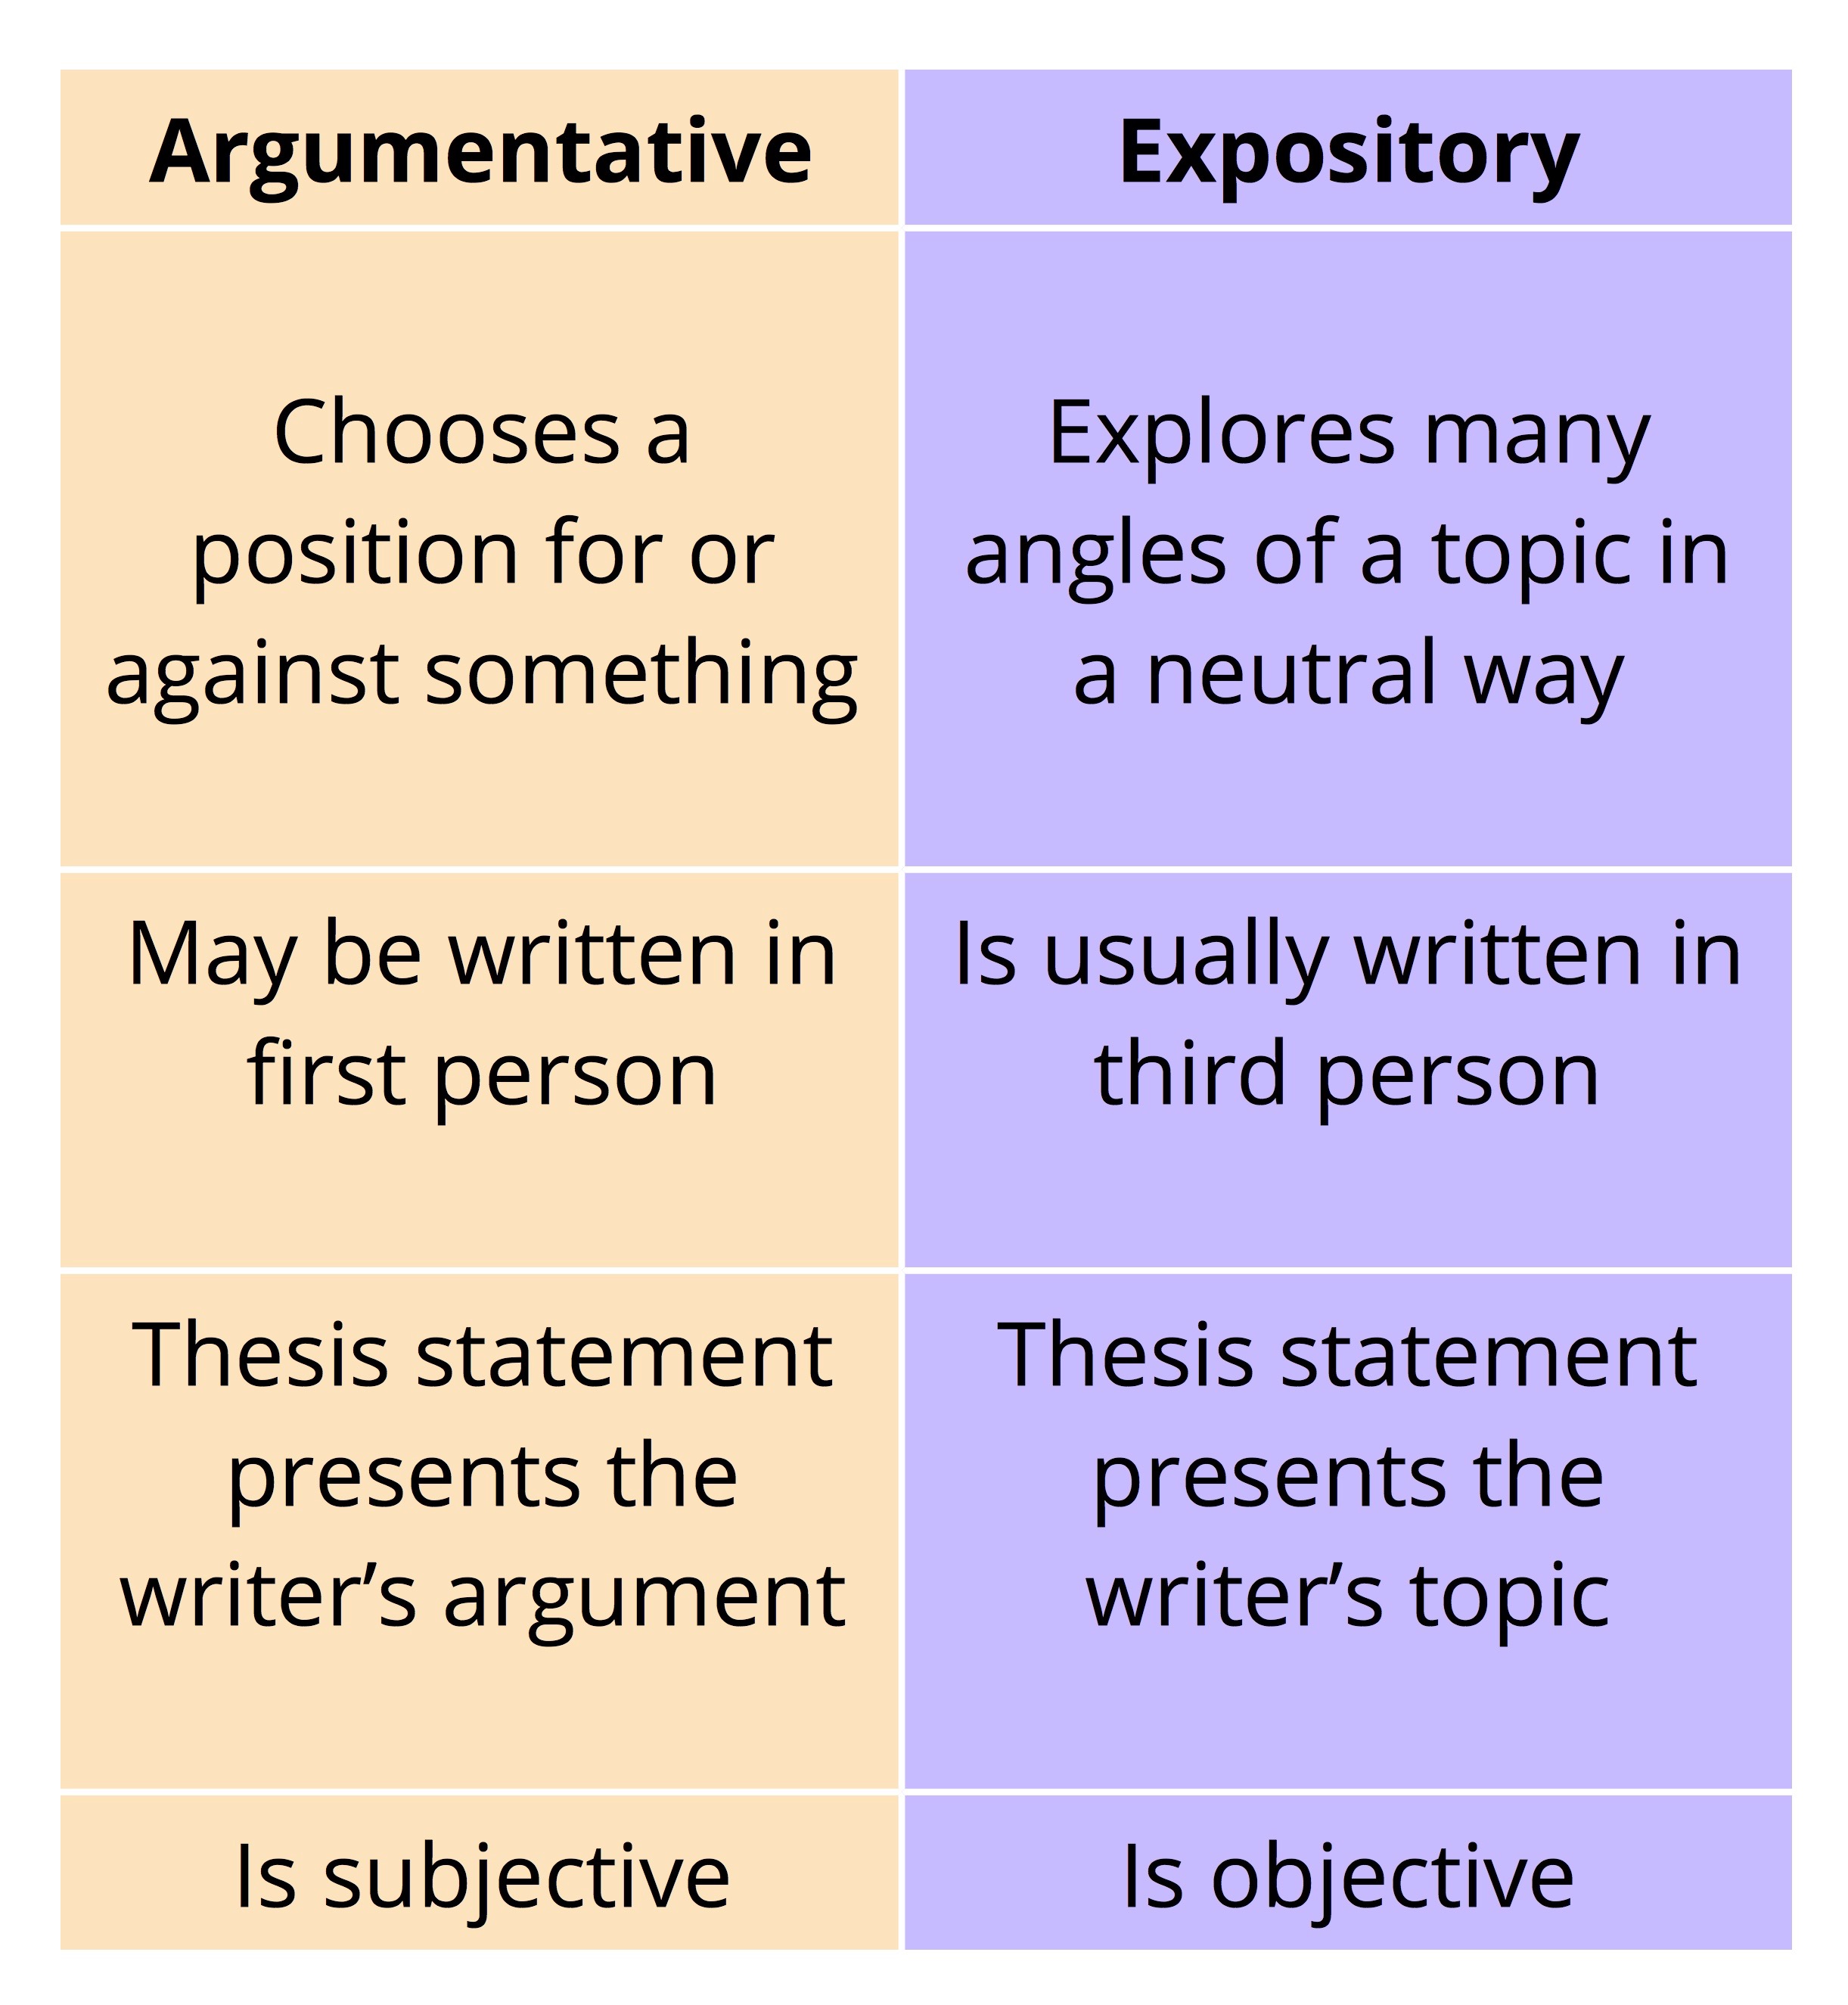 expository essay and argumentative essay